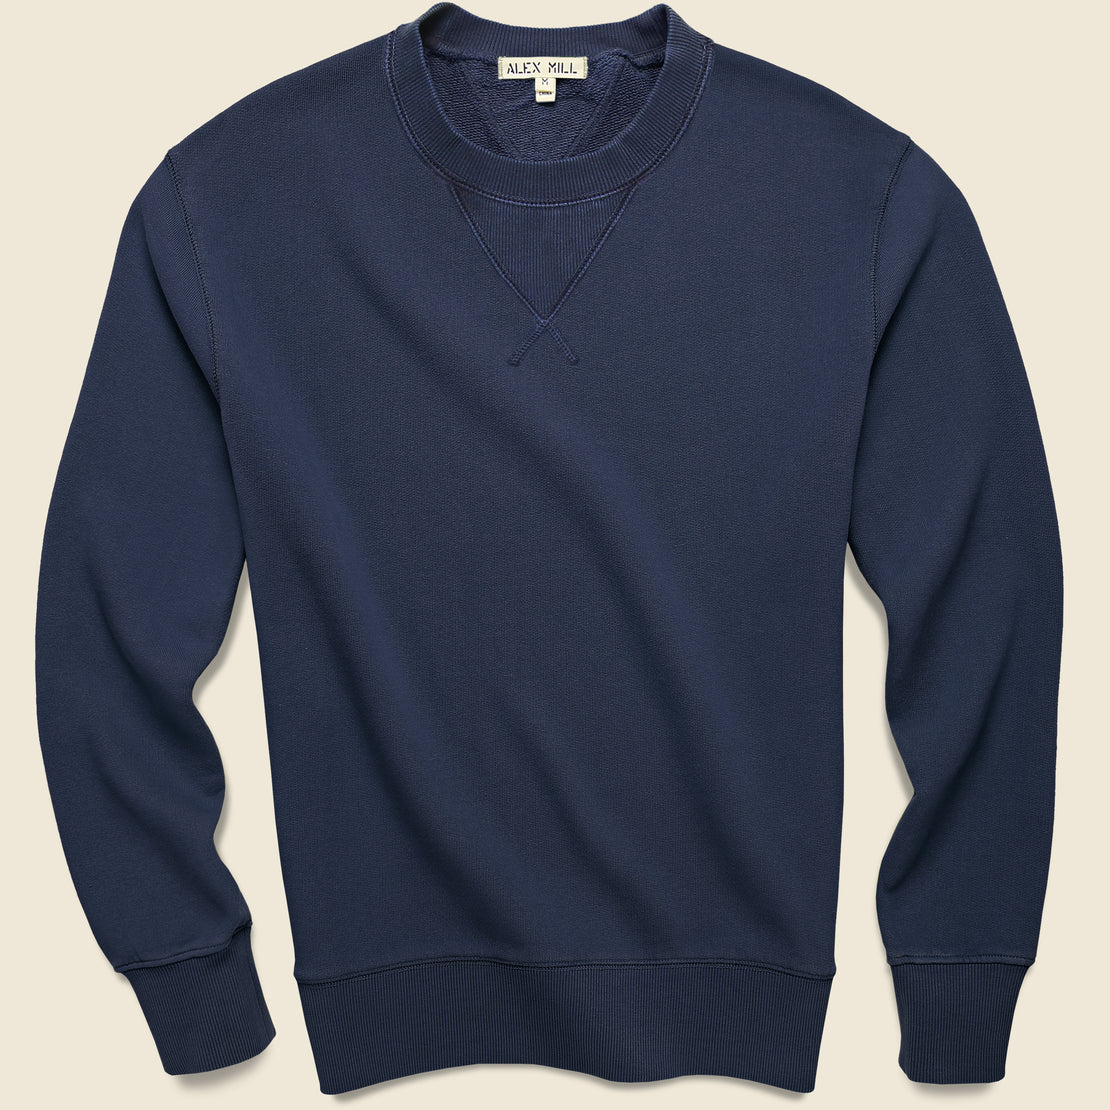 Alex Mill Garment Dyed Crewneck Sweatshirt - Navy